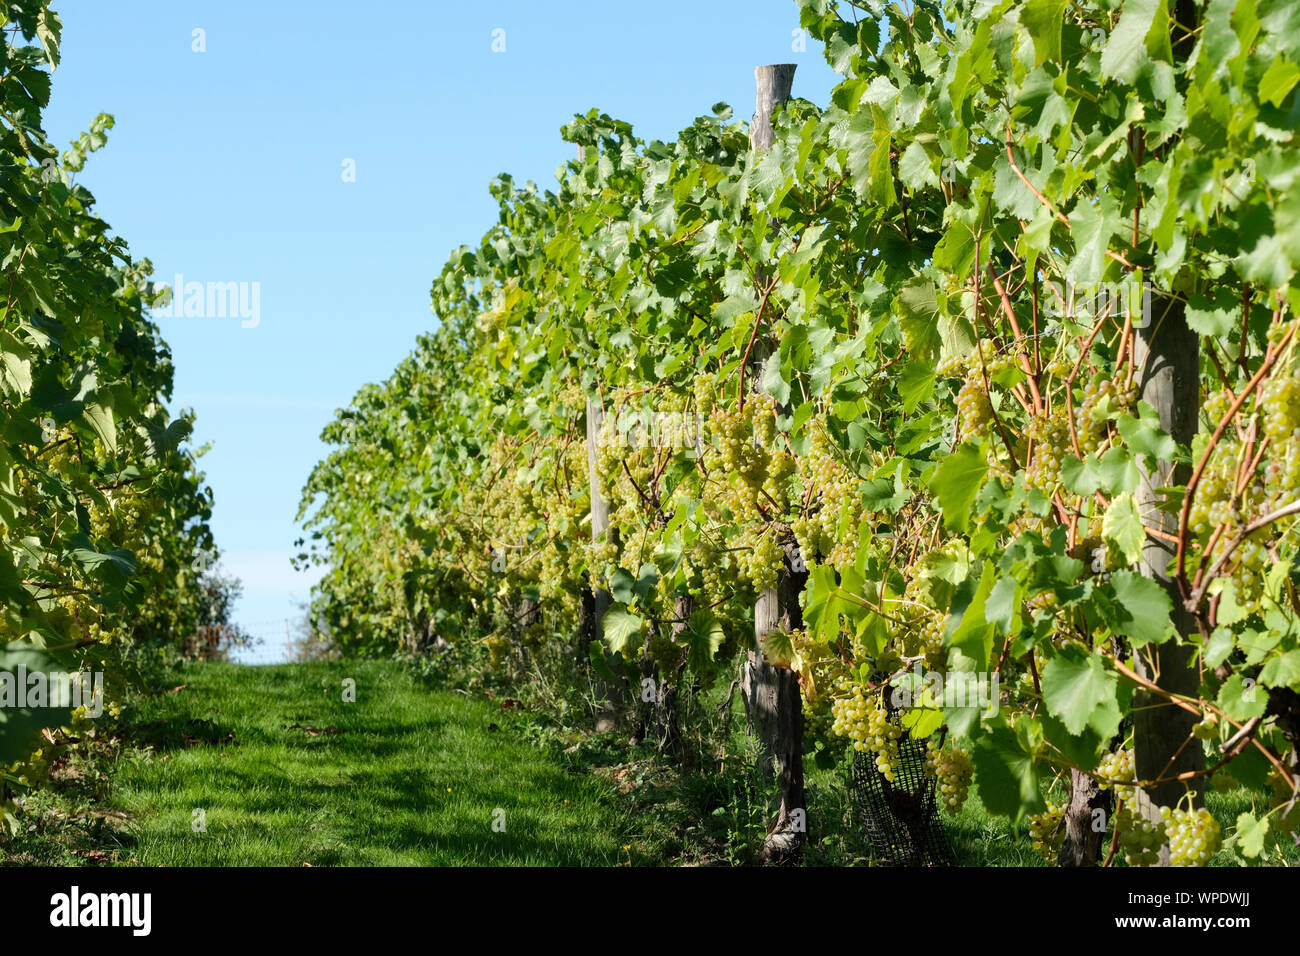 Rows of ripe white hybrid grapes, Vitis 'Orion' grape 'orion' on the vine in an English vinyard Stock Photo